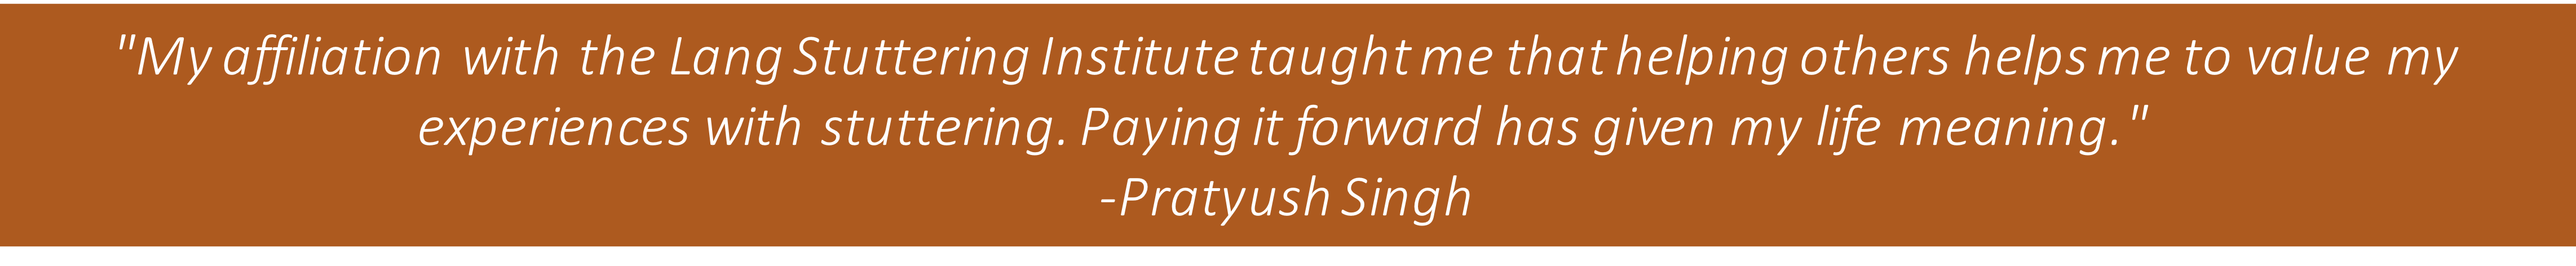 Pratyush Singh Quote